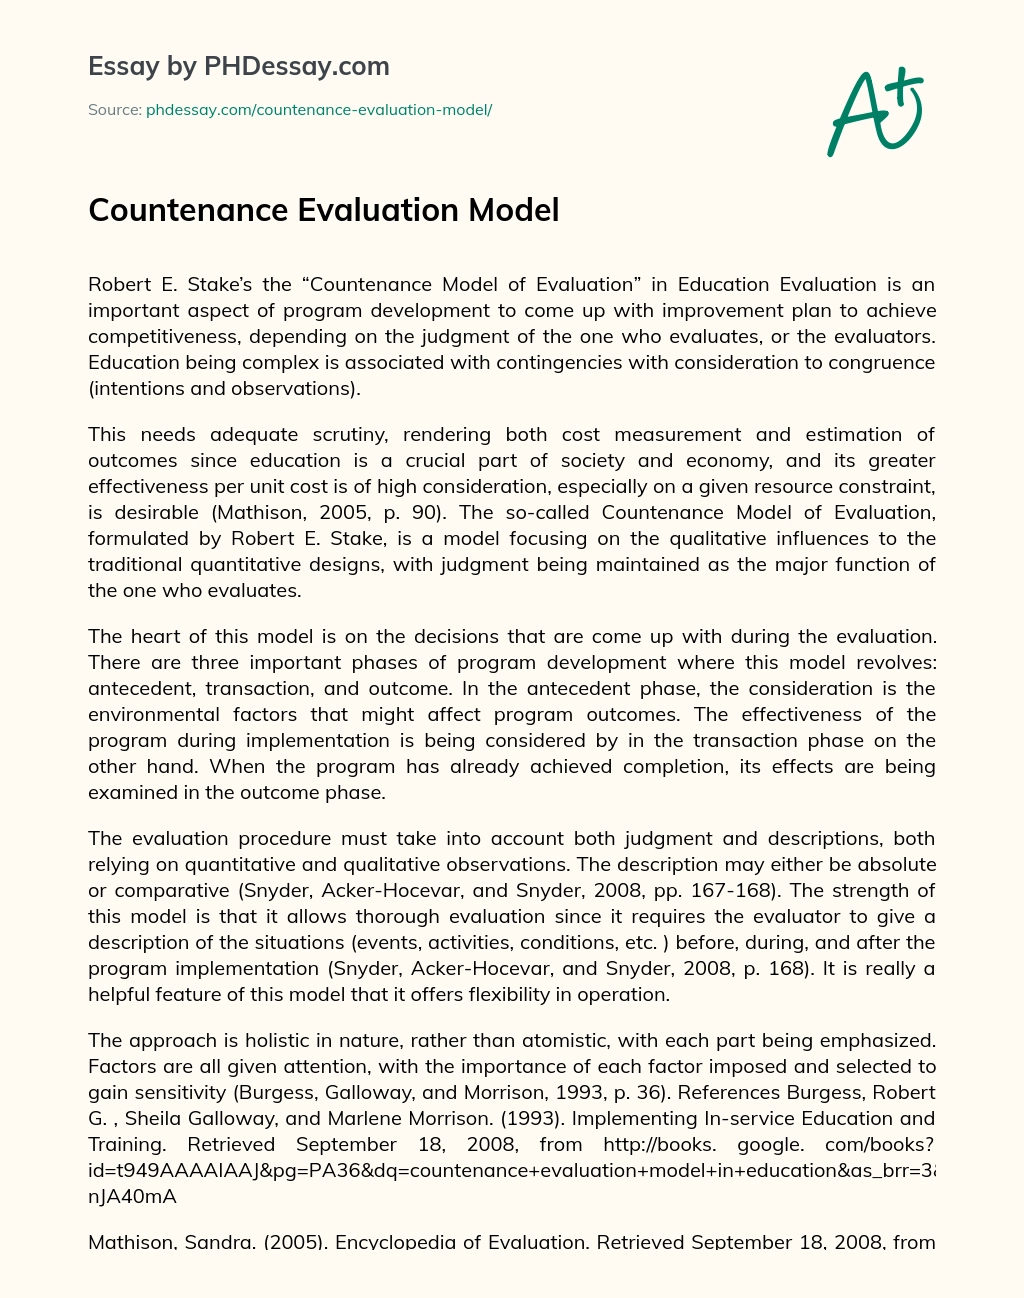 Countenance Evaluation Model essay